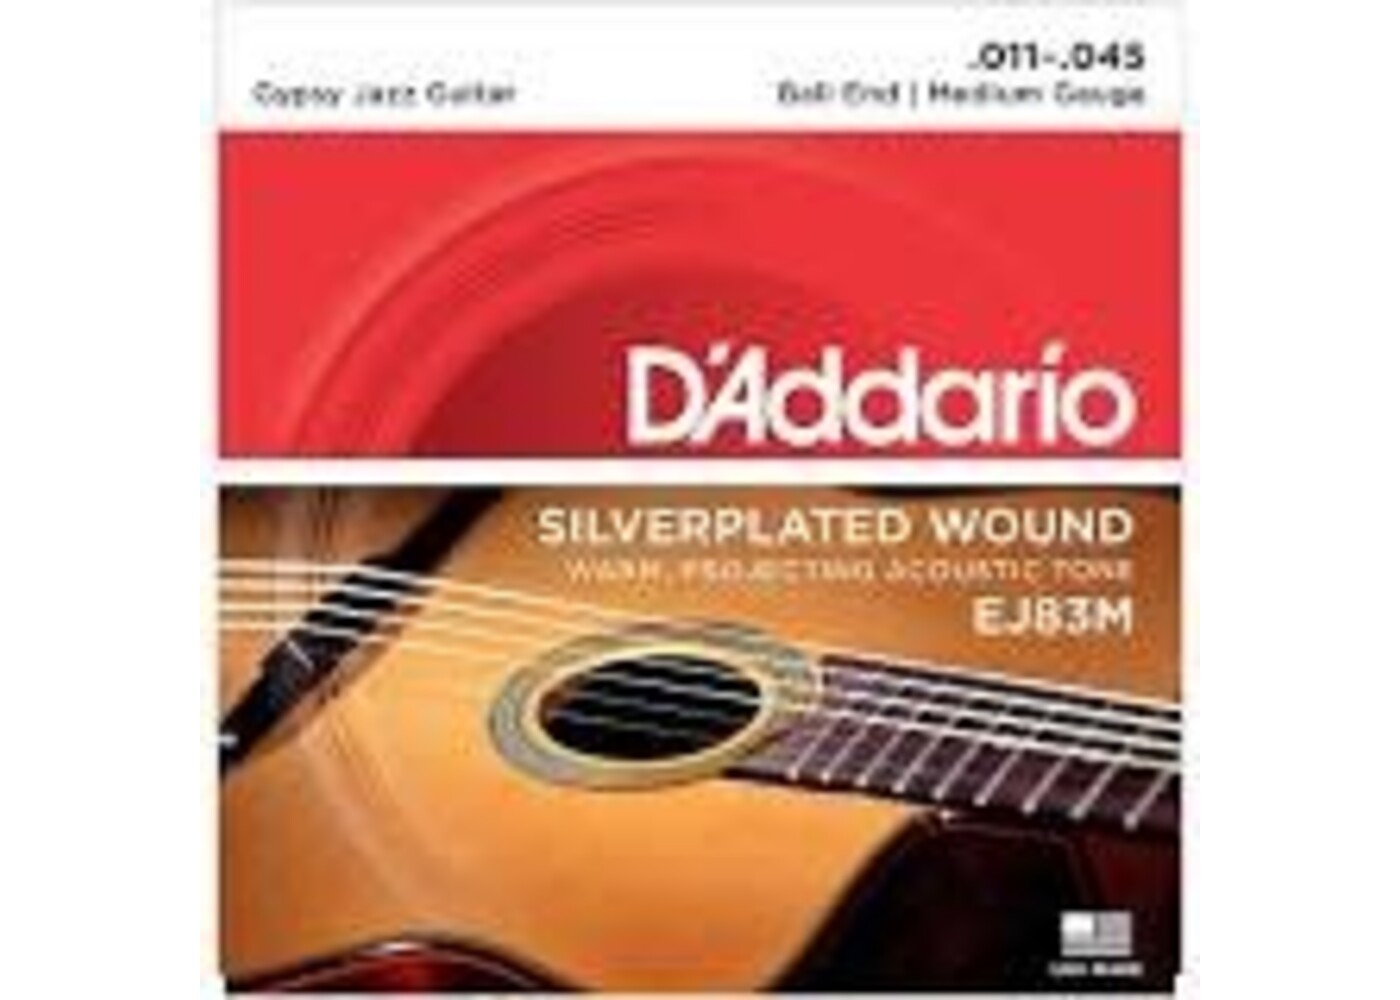 D'Addario D'Addario Silverplated Wound Gypsy Jazz Guitar Med. Gauge